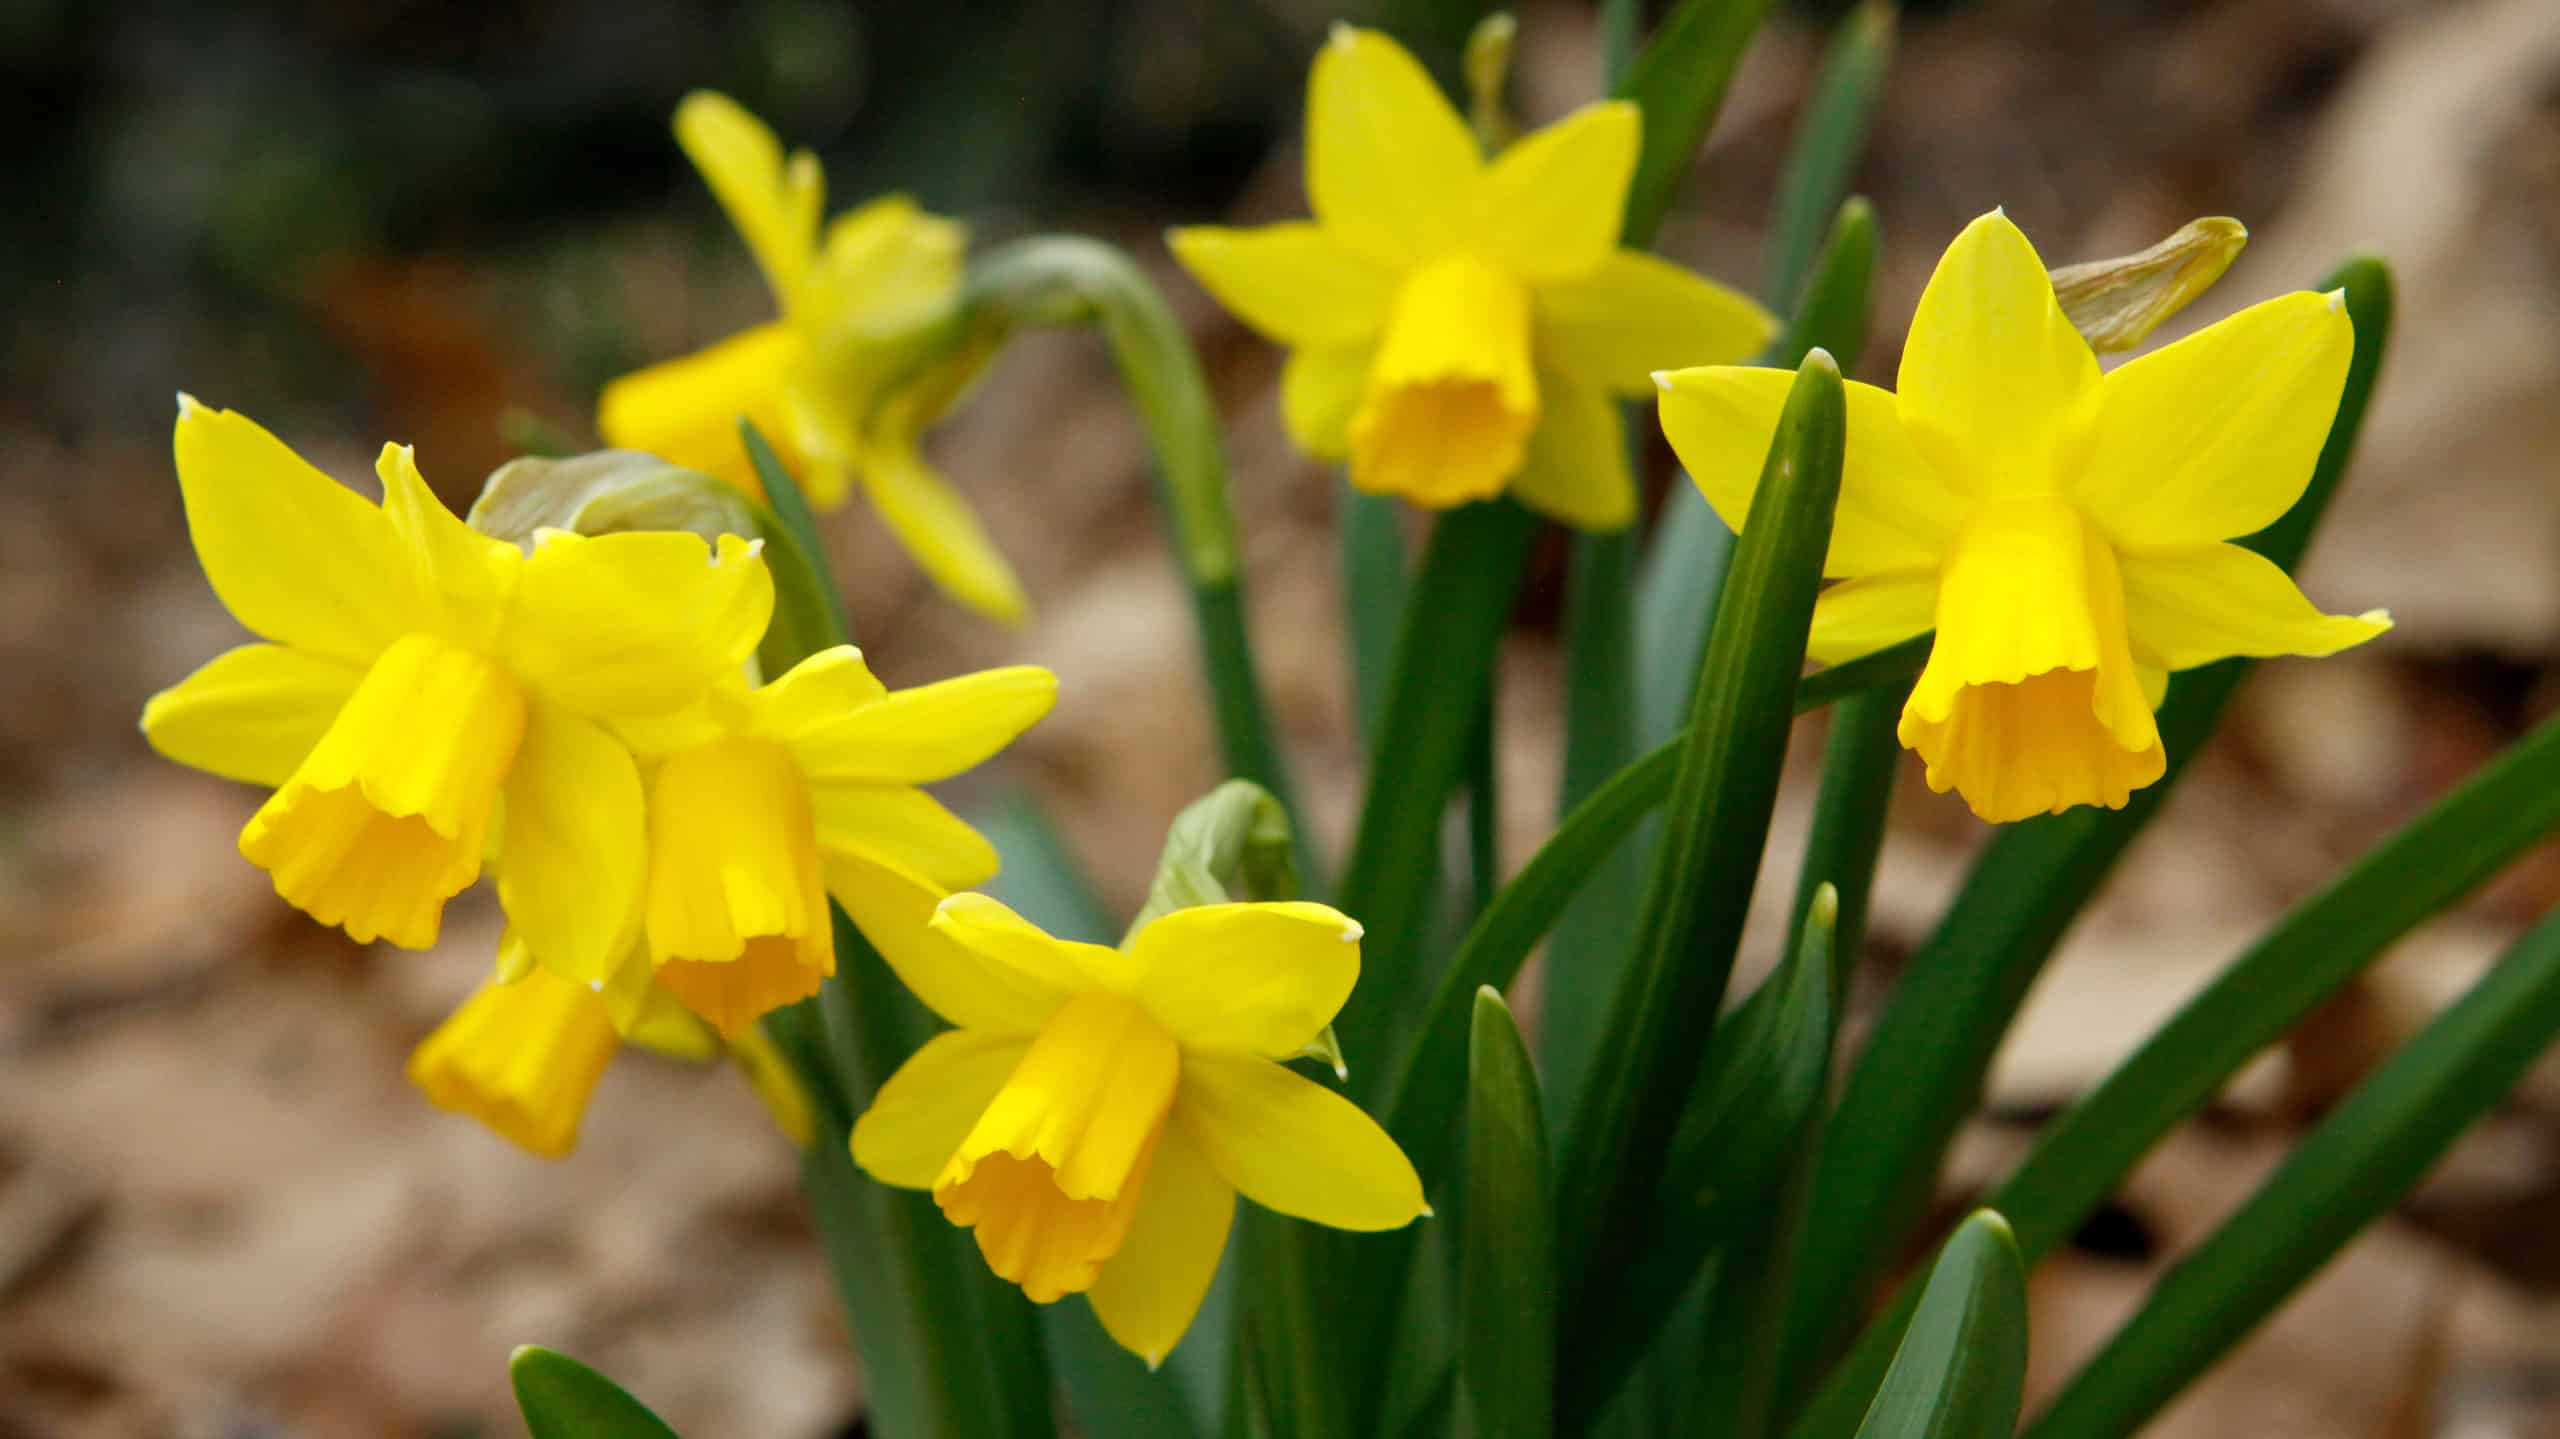 12 Types Of Miniature Daffodils - AZ Animals